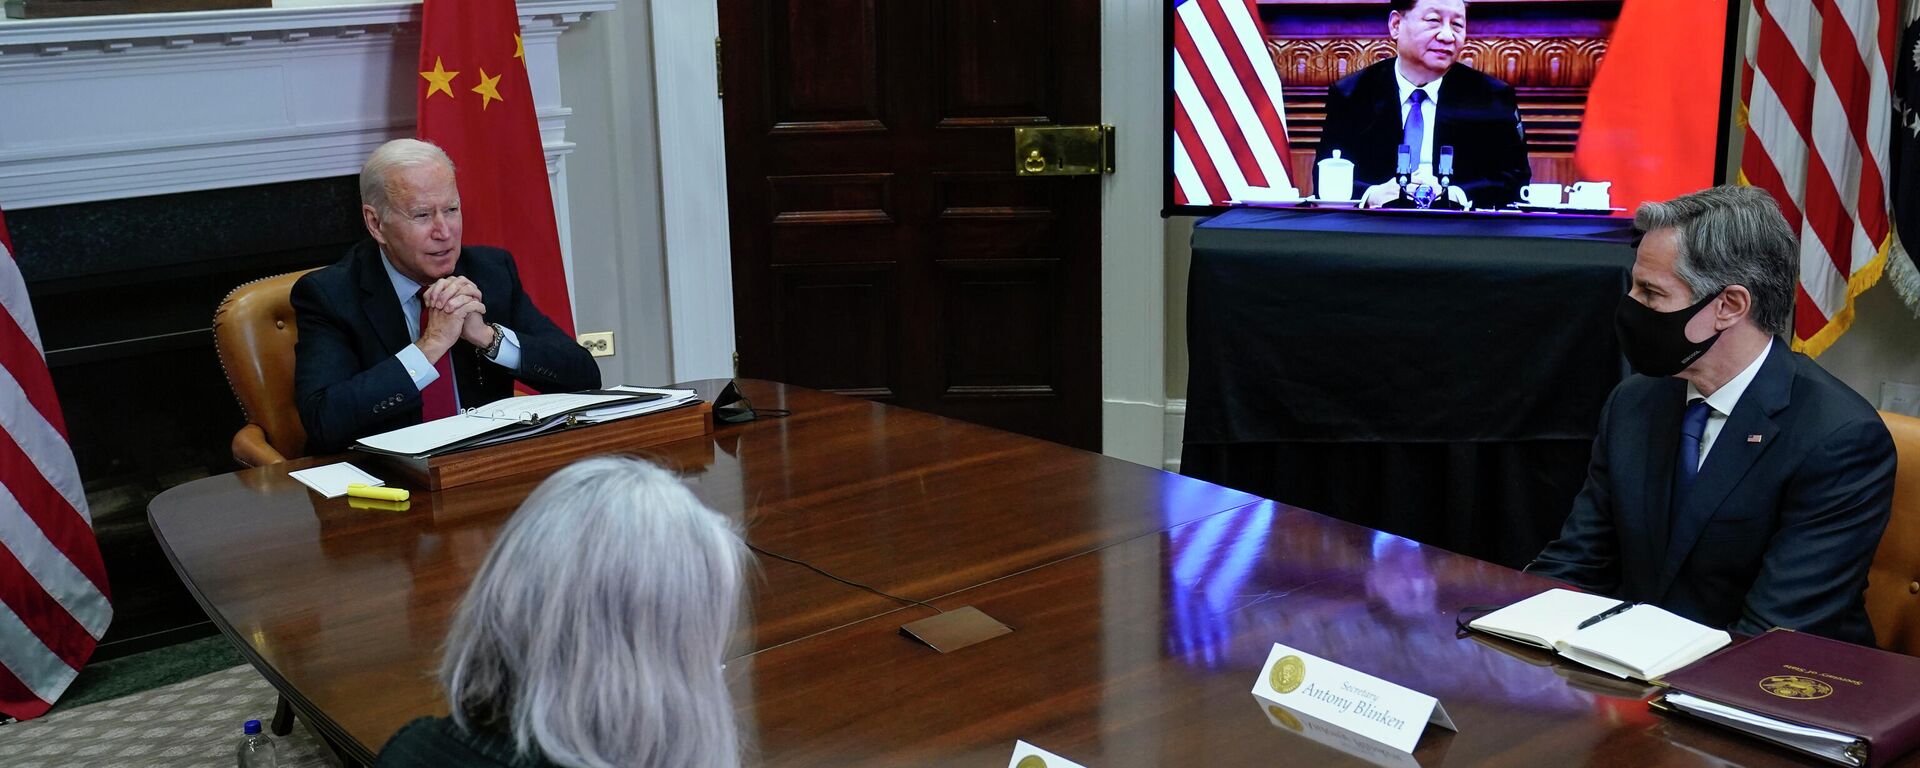 Президент США Джо Байден во время встречи с председателем КНР Си Цзиньпином в режиме видеоконференции - Sputnik Узбекистан, 1920, 17.11.2021